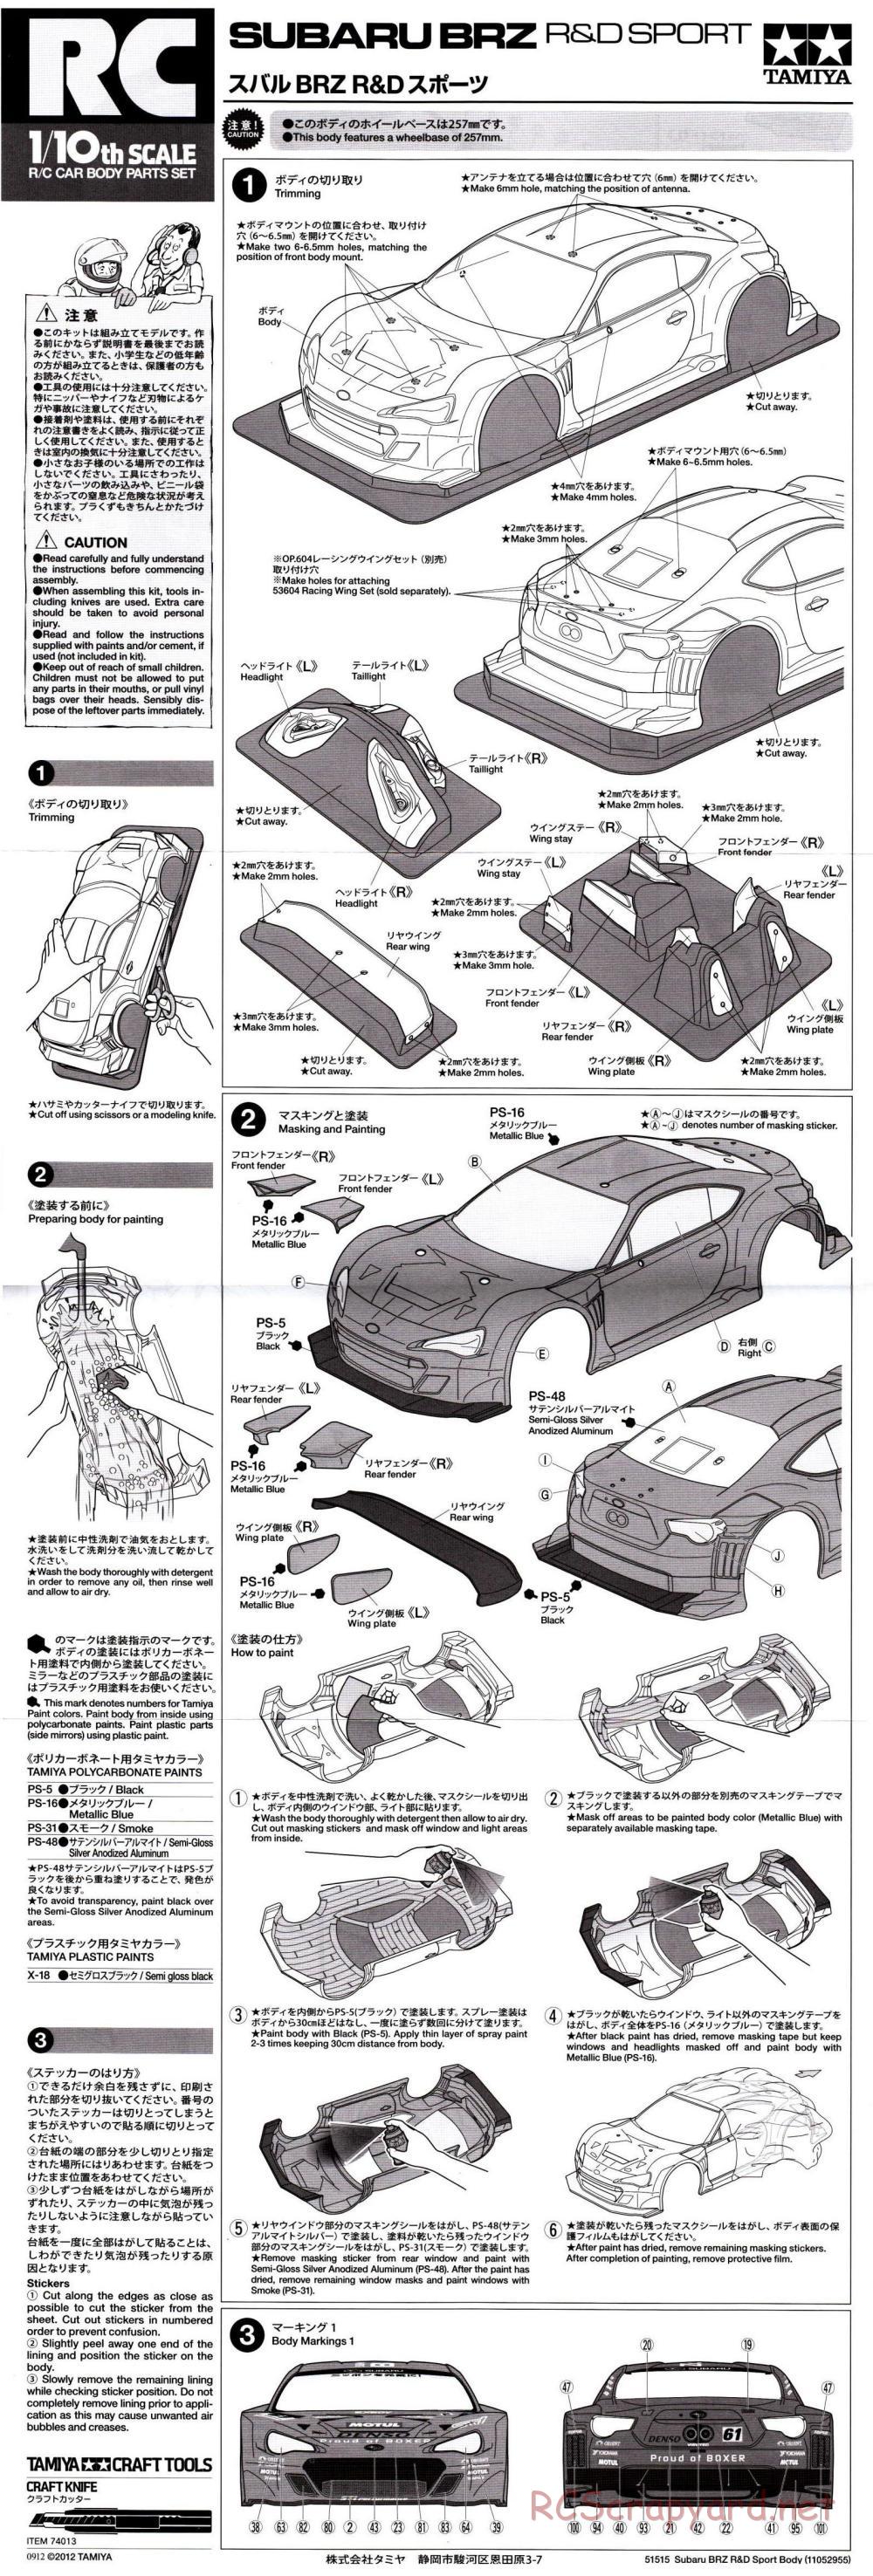 Tamiya - Subaru BRZ R&D Sport - TA06 Chassis - Body Manual - Page 1